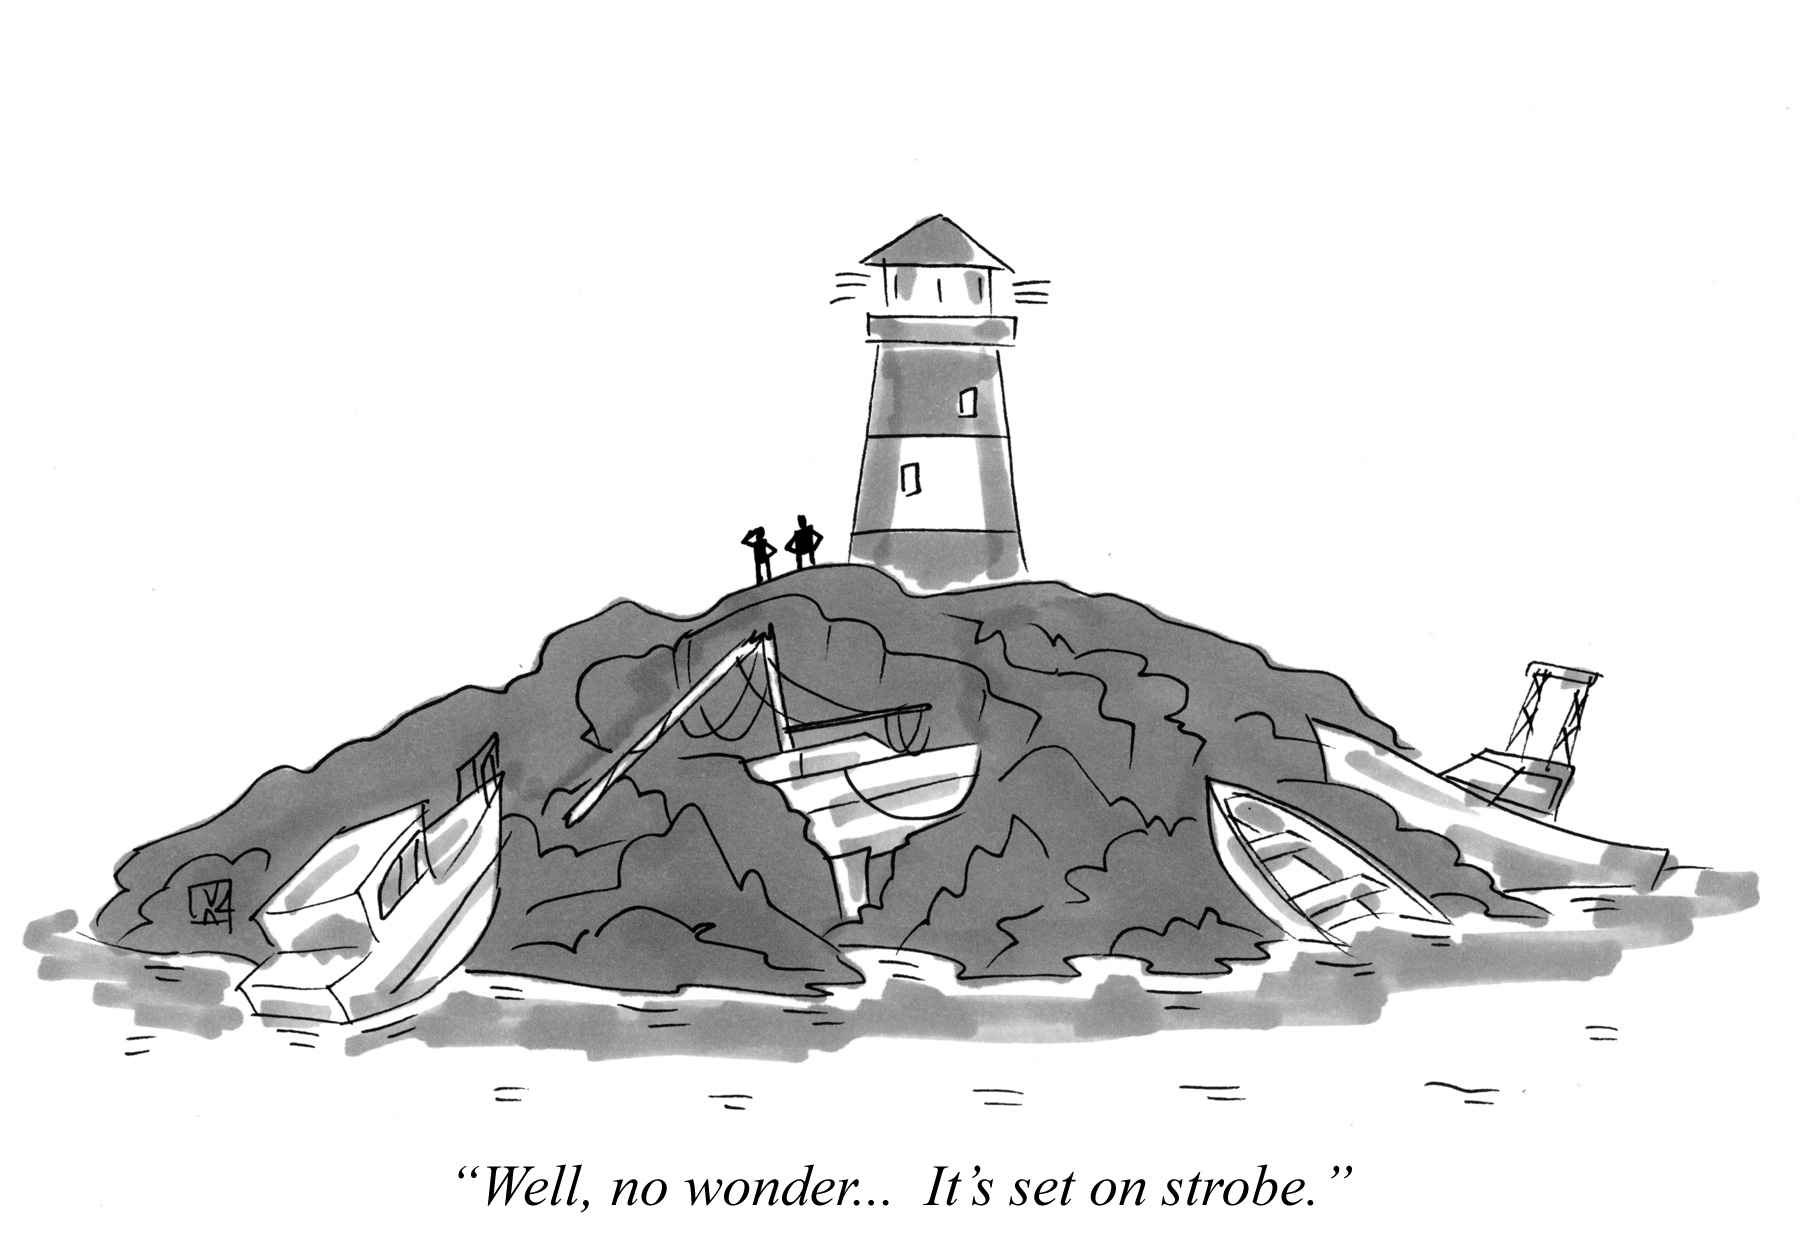 Cartoon about boats grounding because of a broken lighthouse